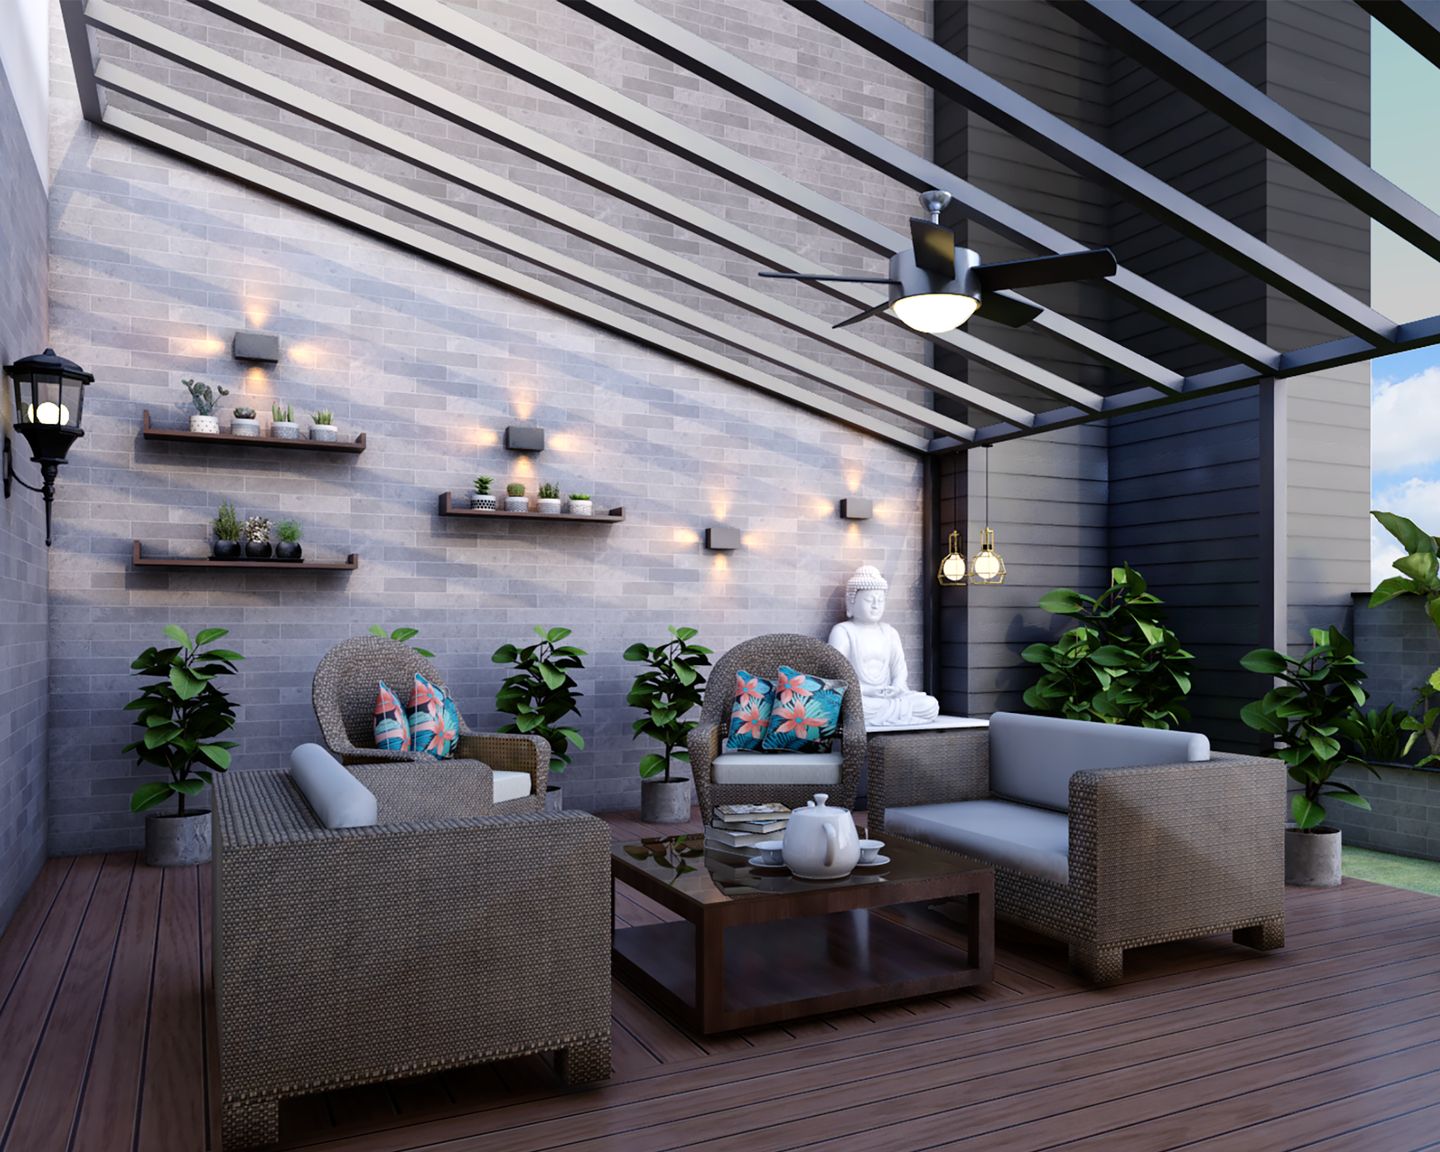 Contemporary Spacious Balcony Design with Shelves and Plants - Livspace